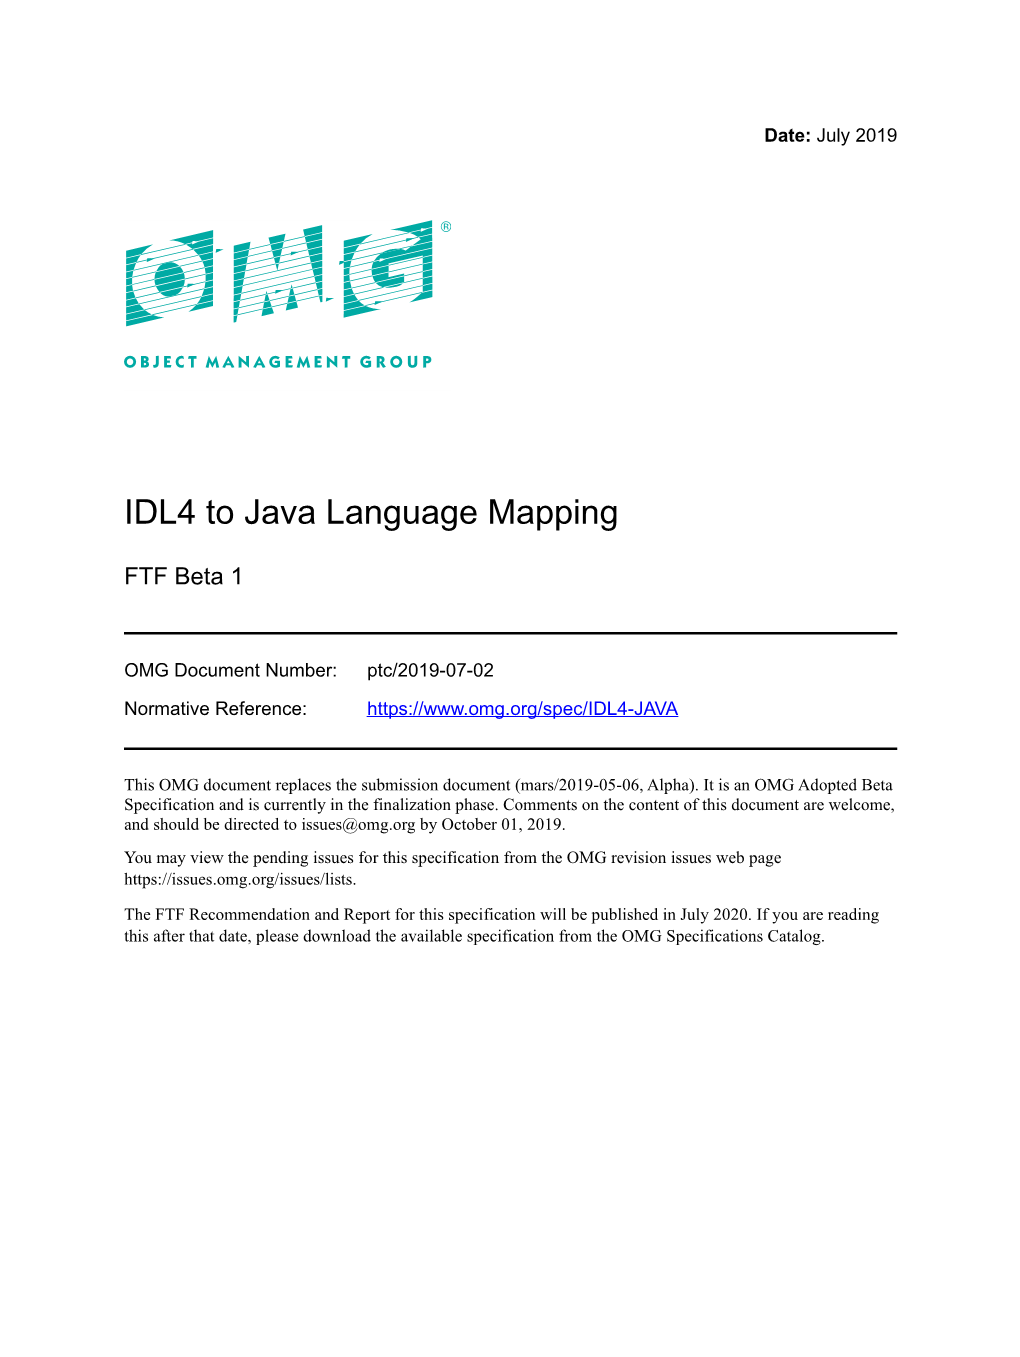 IDL4 to Java Language Mapping